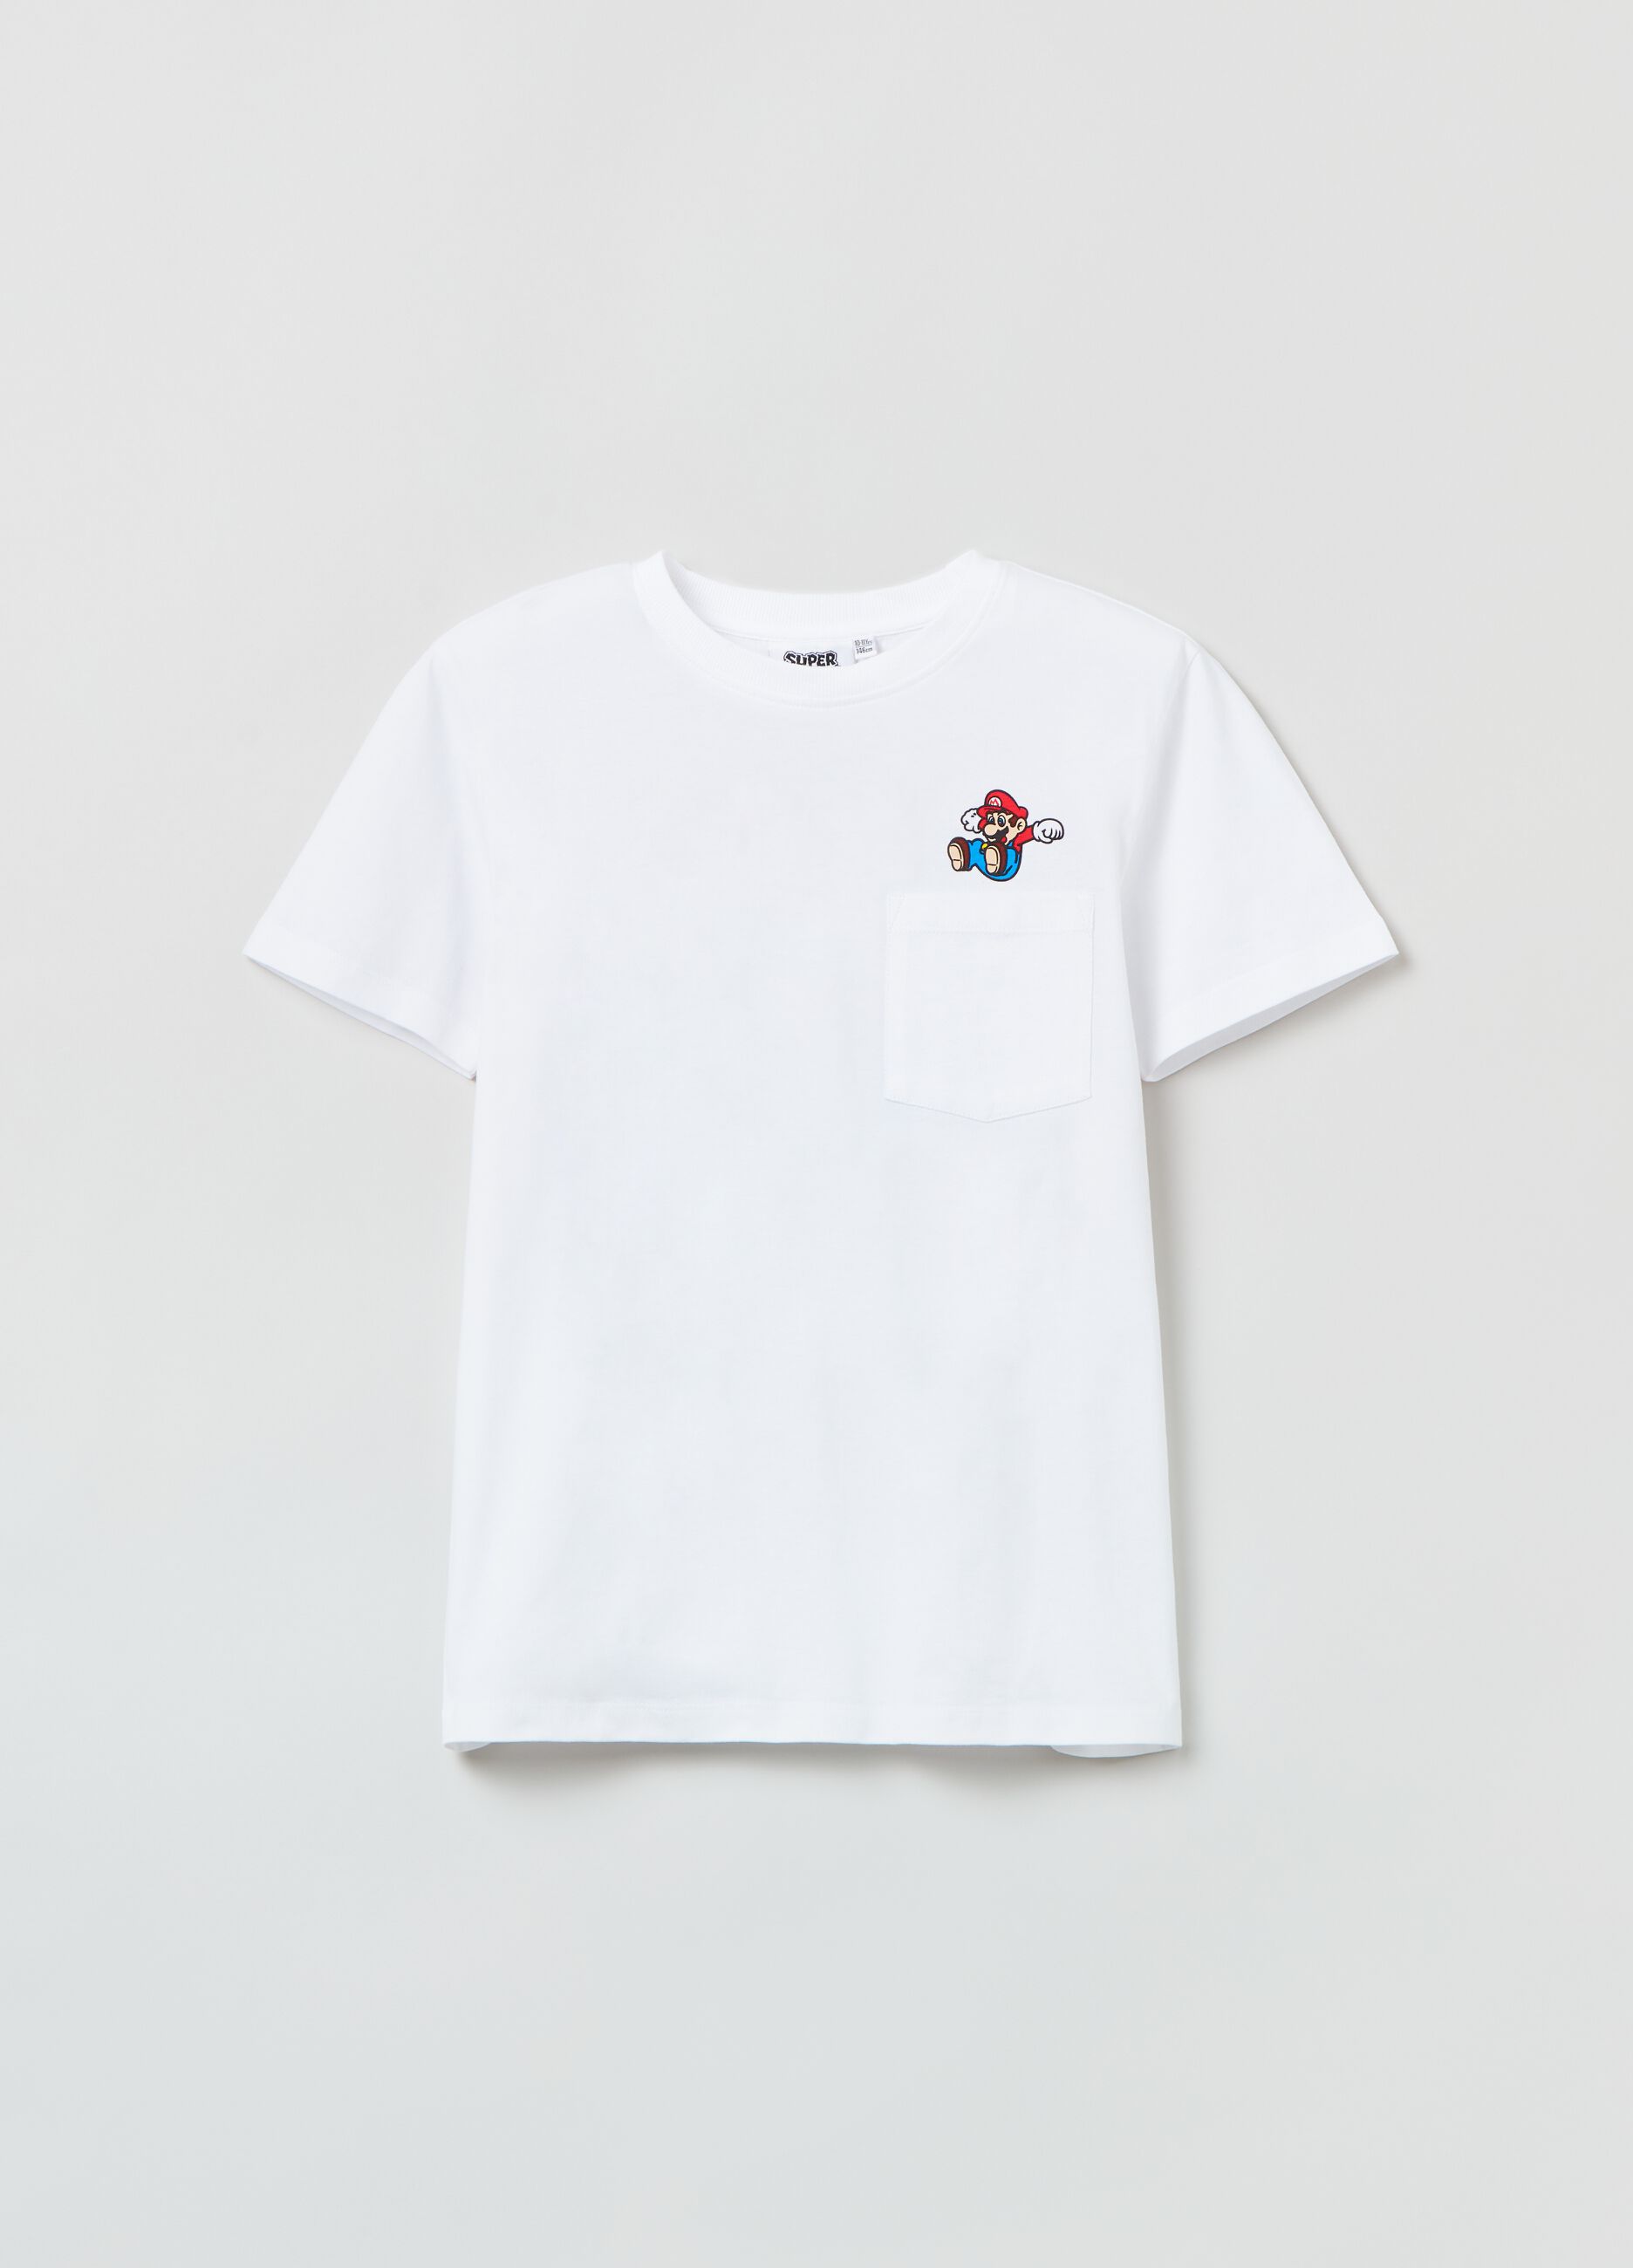 Cotton T-shirt with Super Mario print